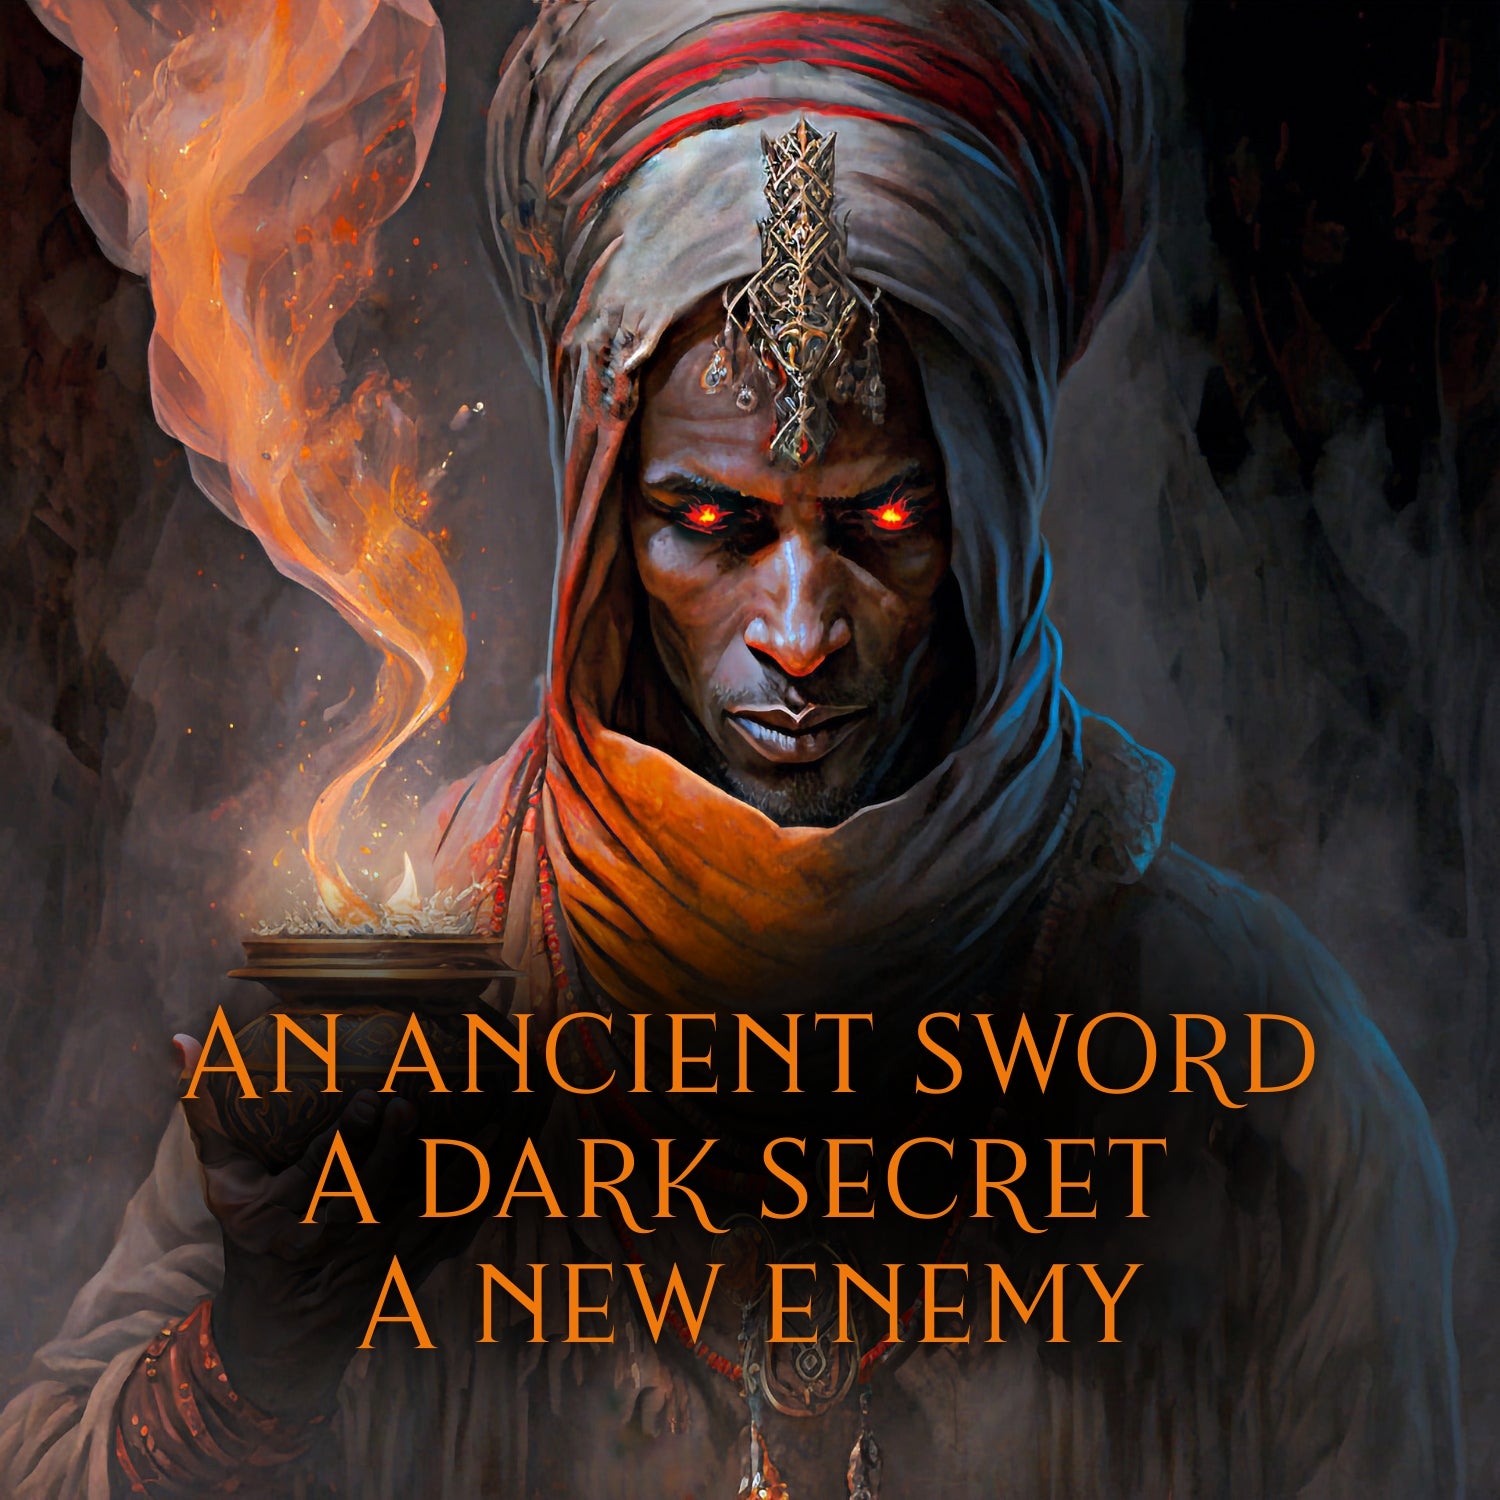 An ancient sword. A dark secret. A new enemy.